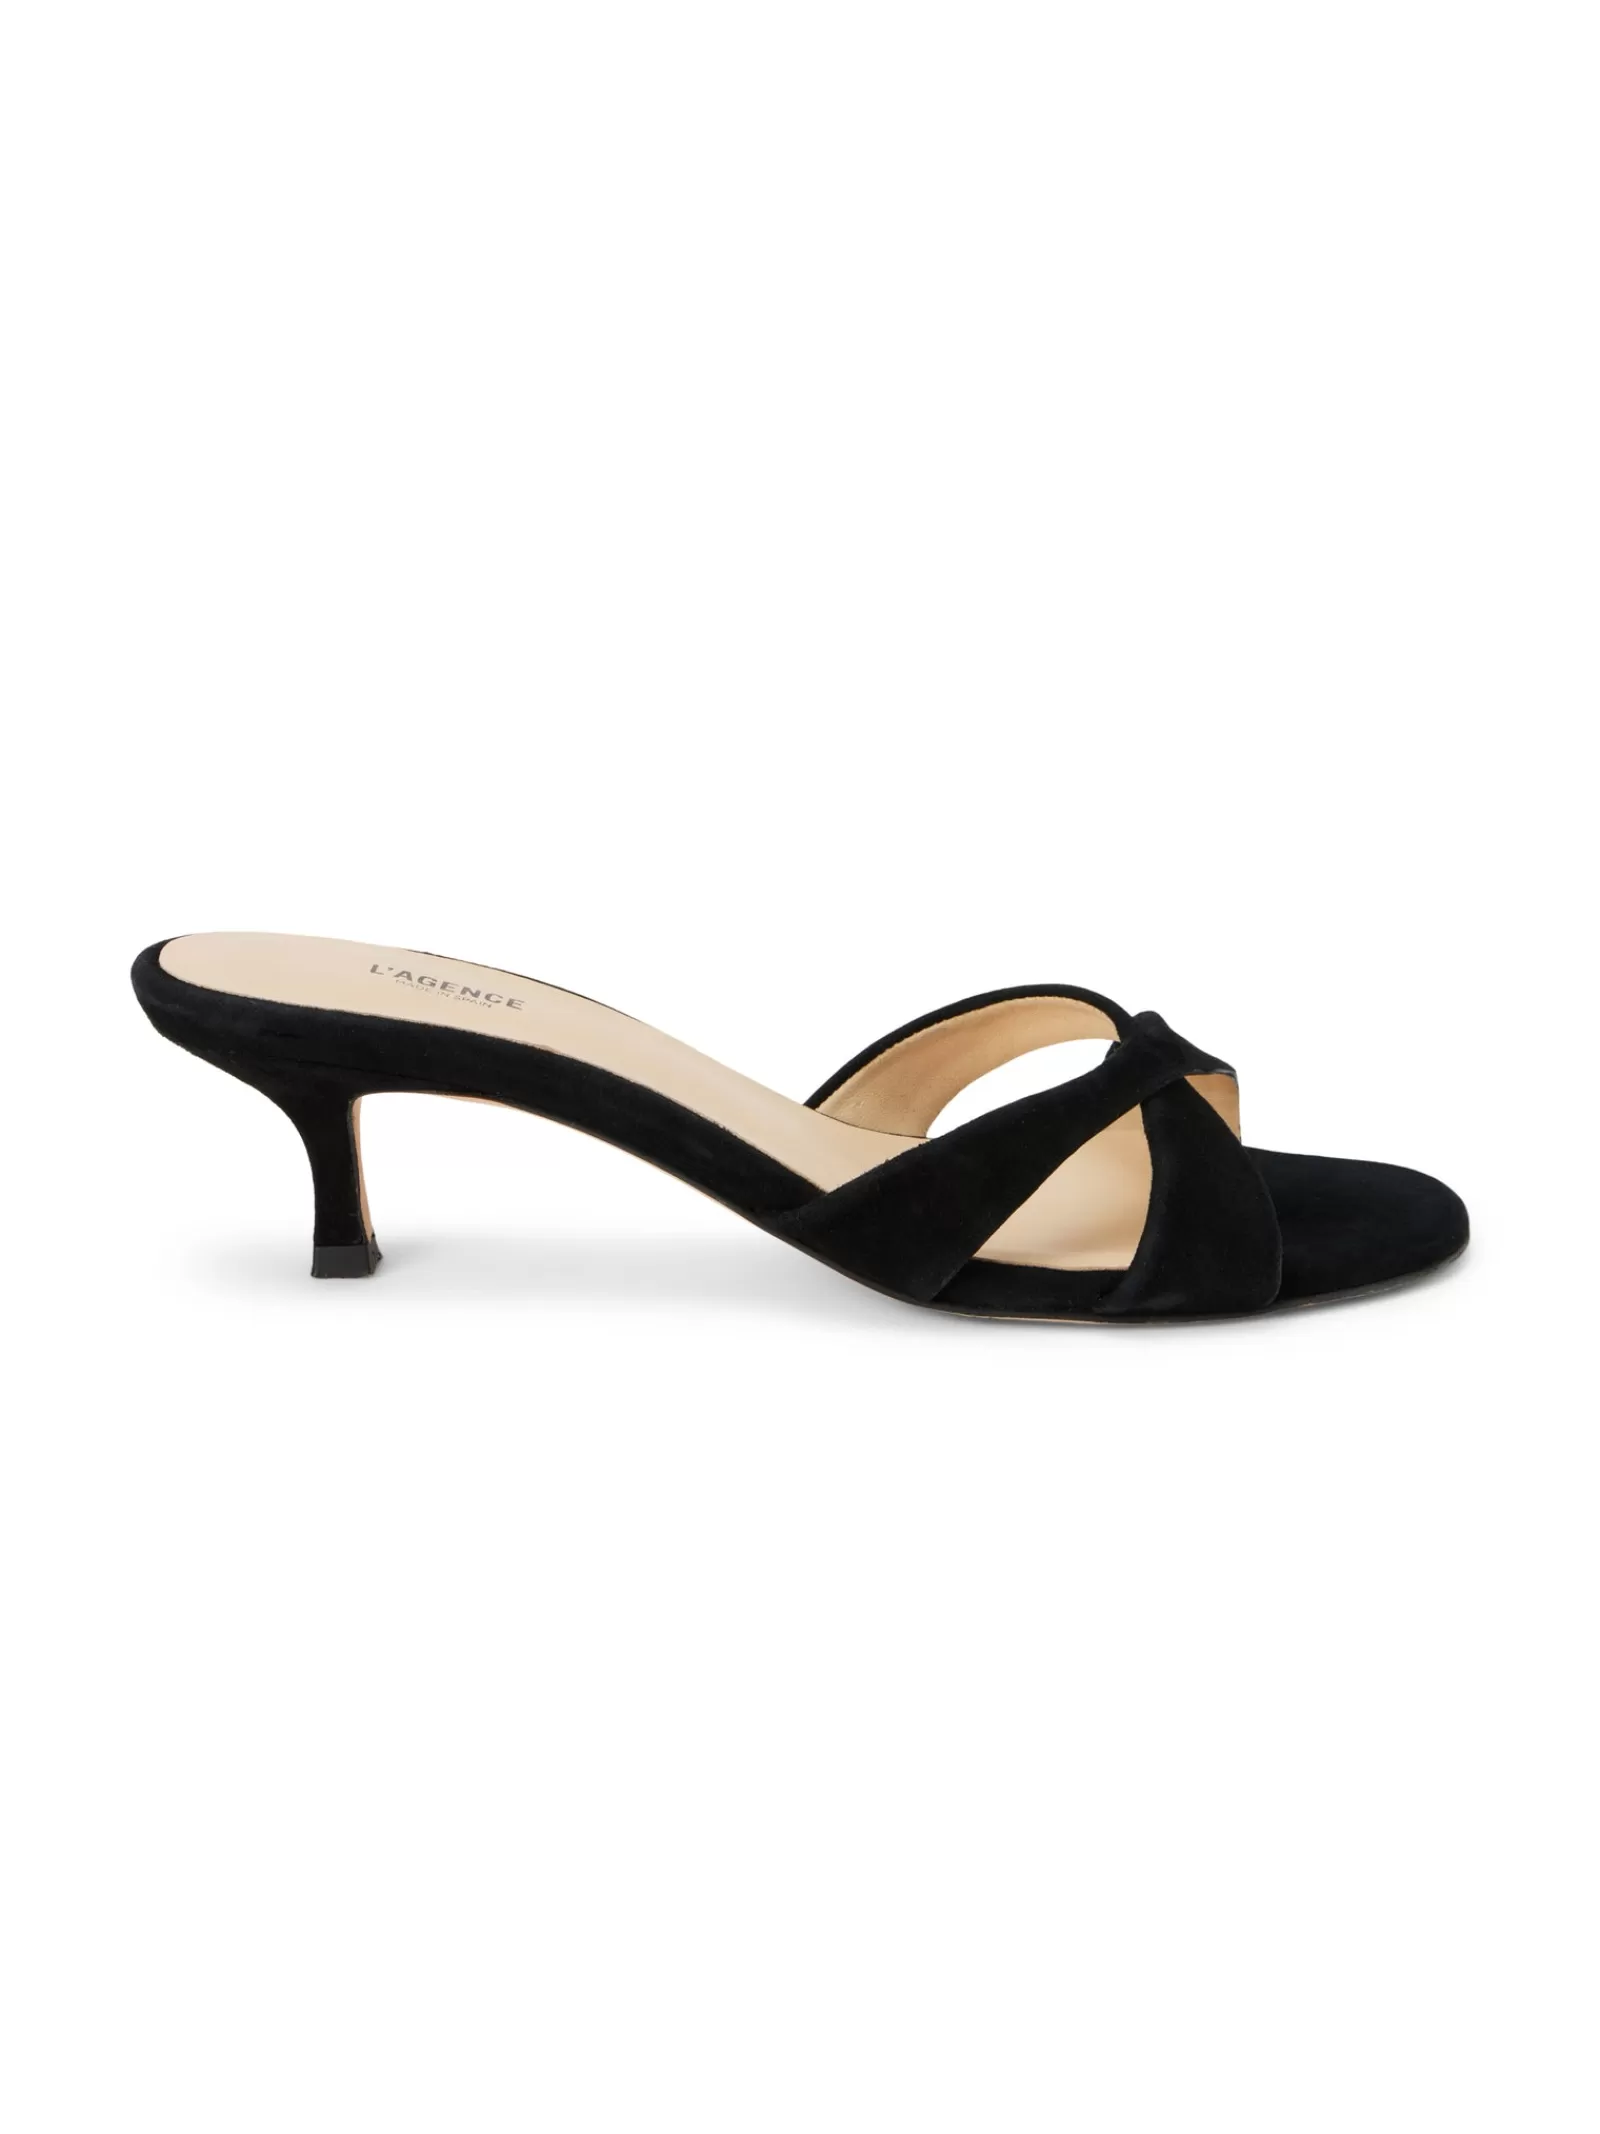 L'AGENCE Aveline Kitten-Heel Sandal< Spring Collection | Heels & Pumps